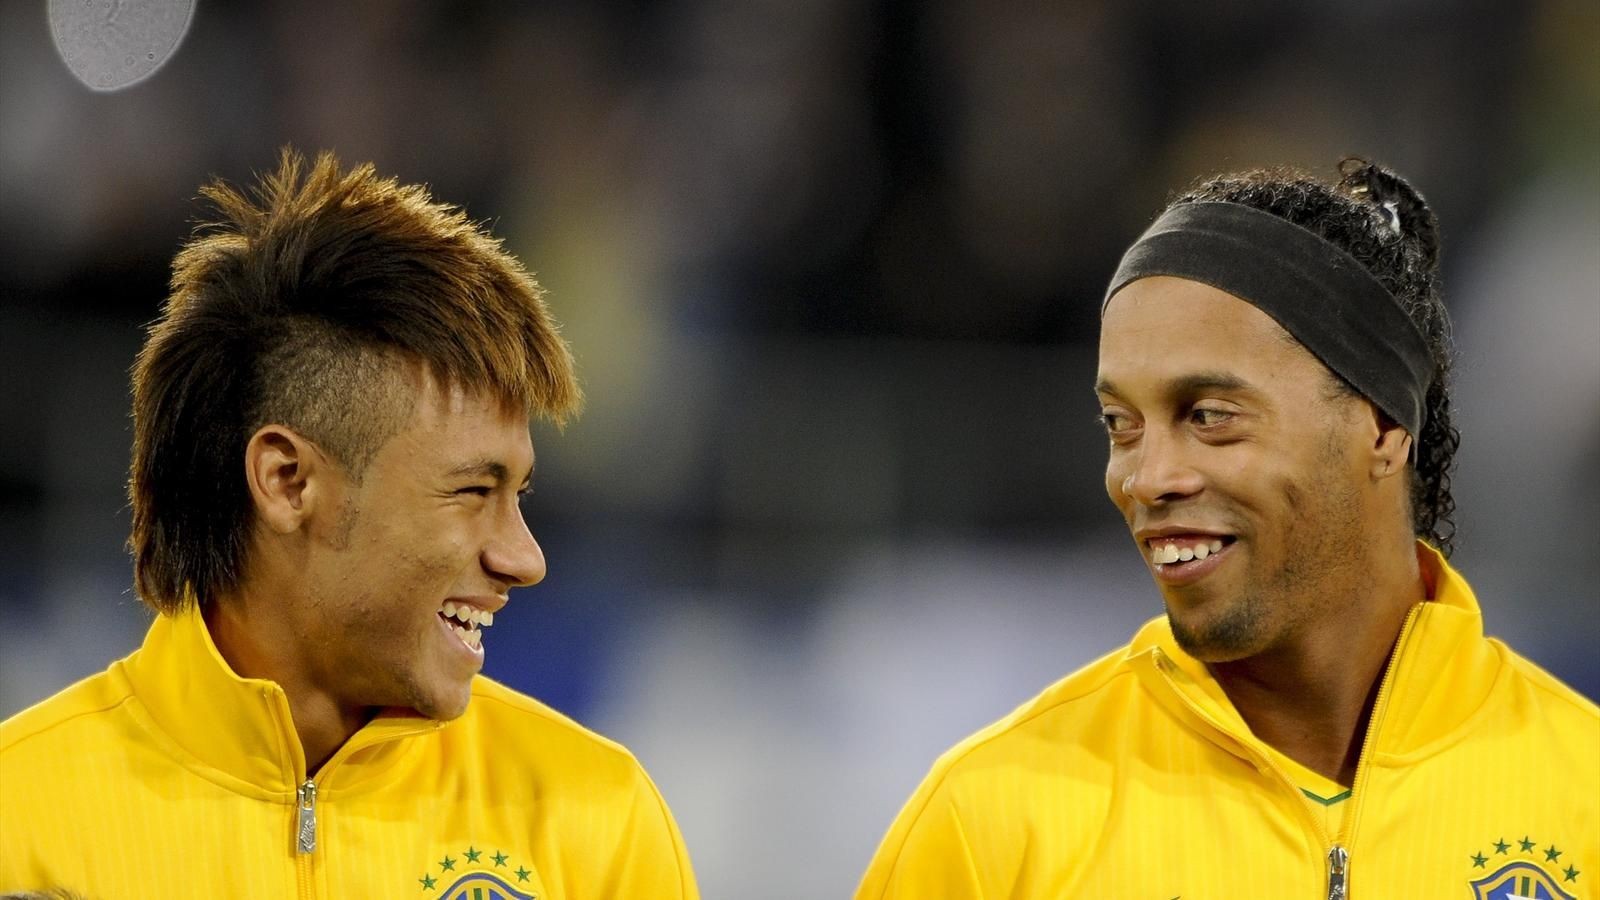 People 1600x900 footballers soccer Brazil Ronaldinho Neymar men sport